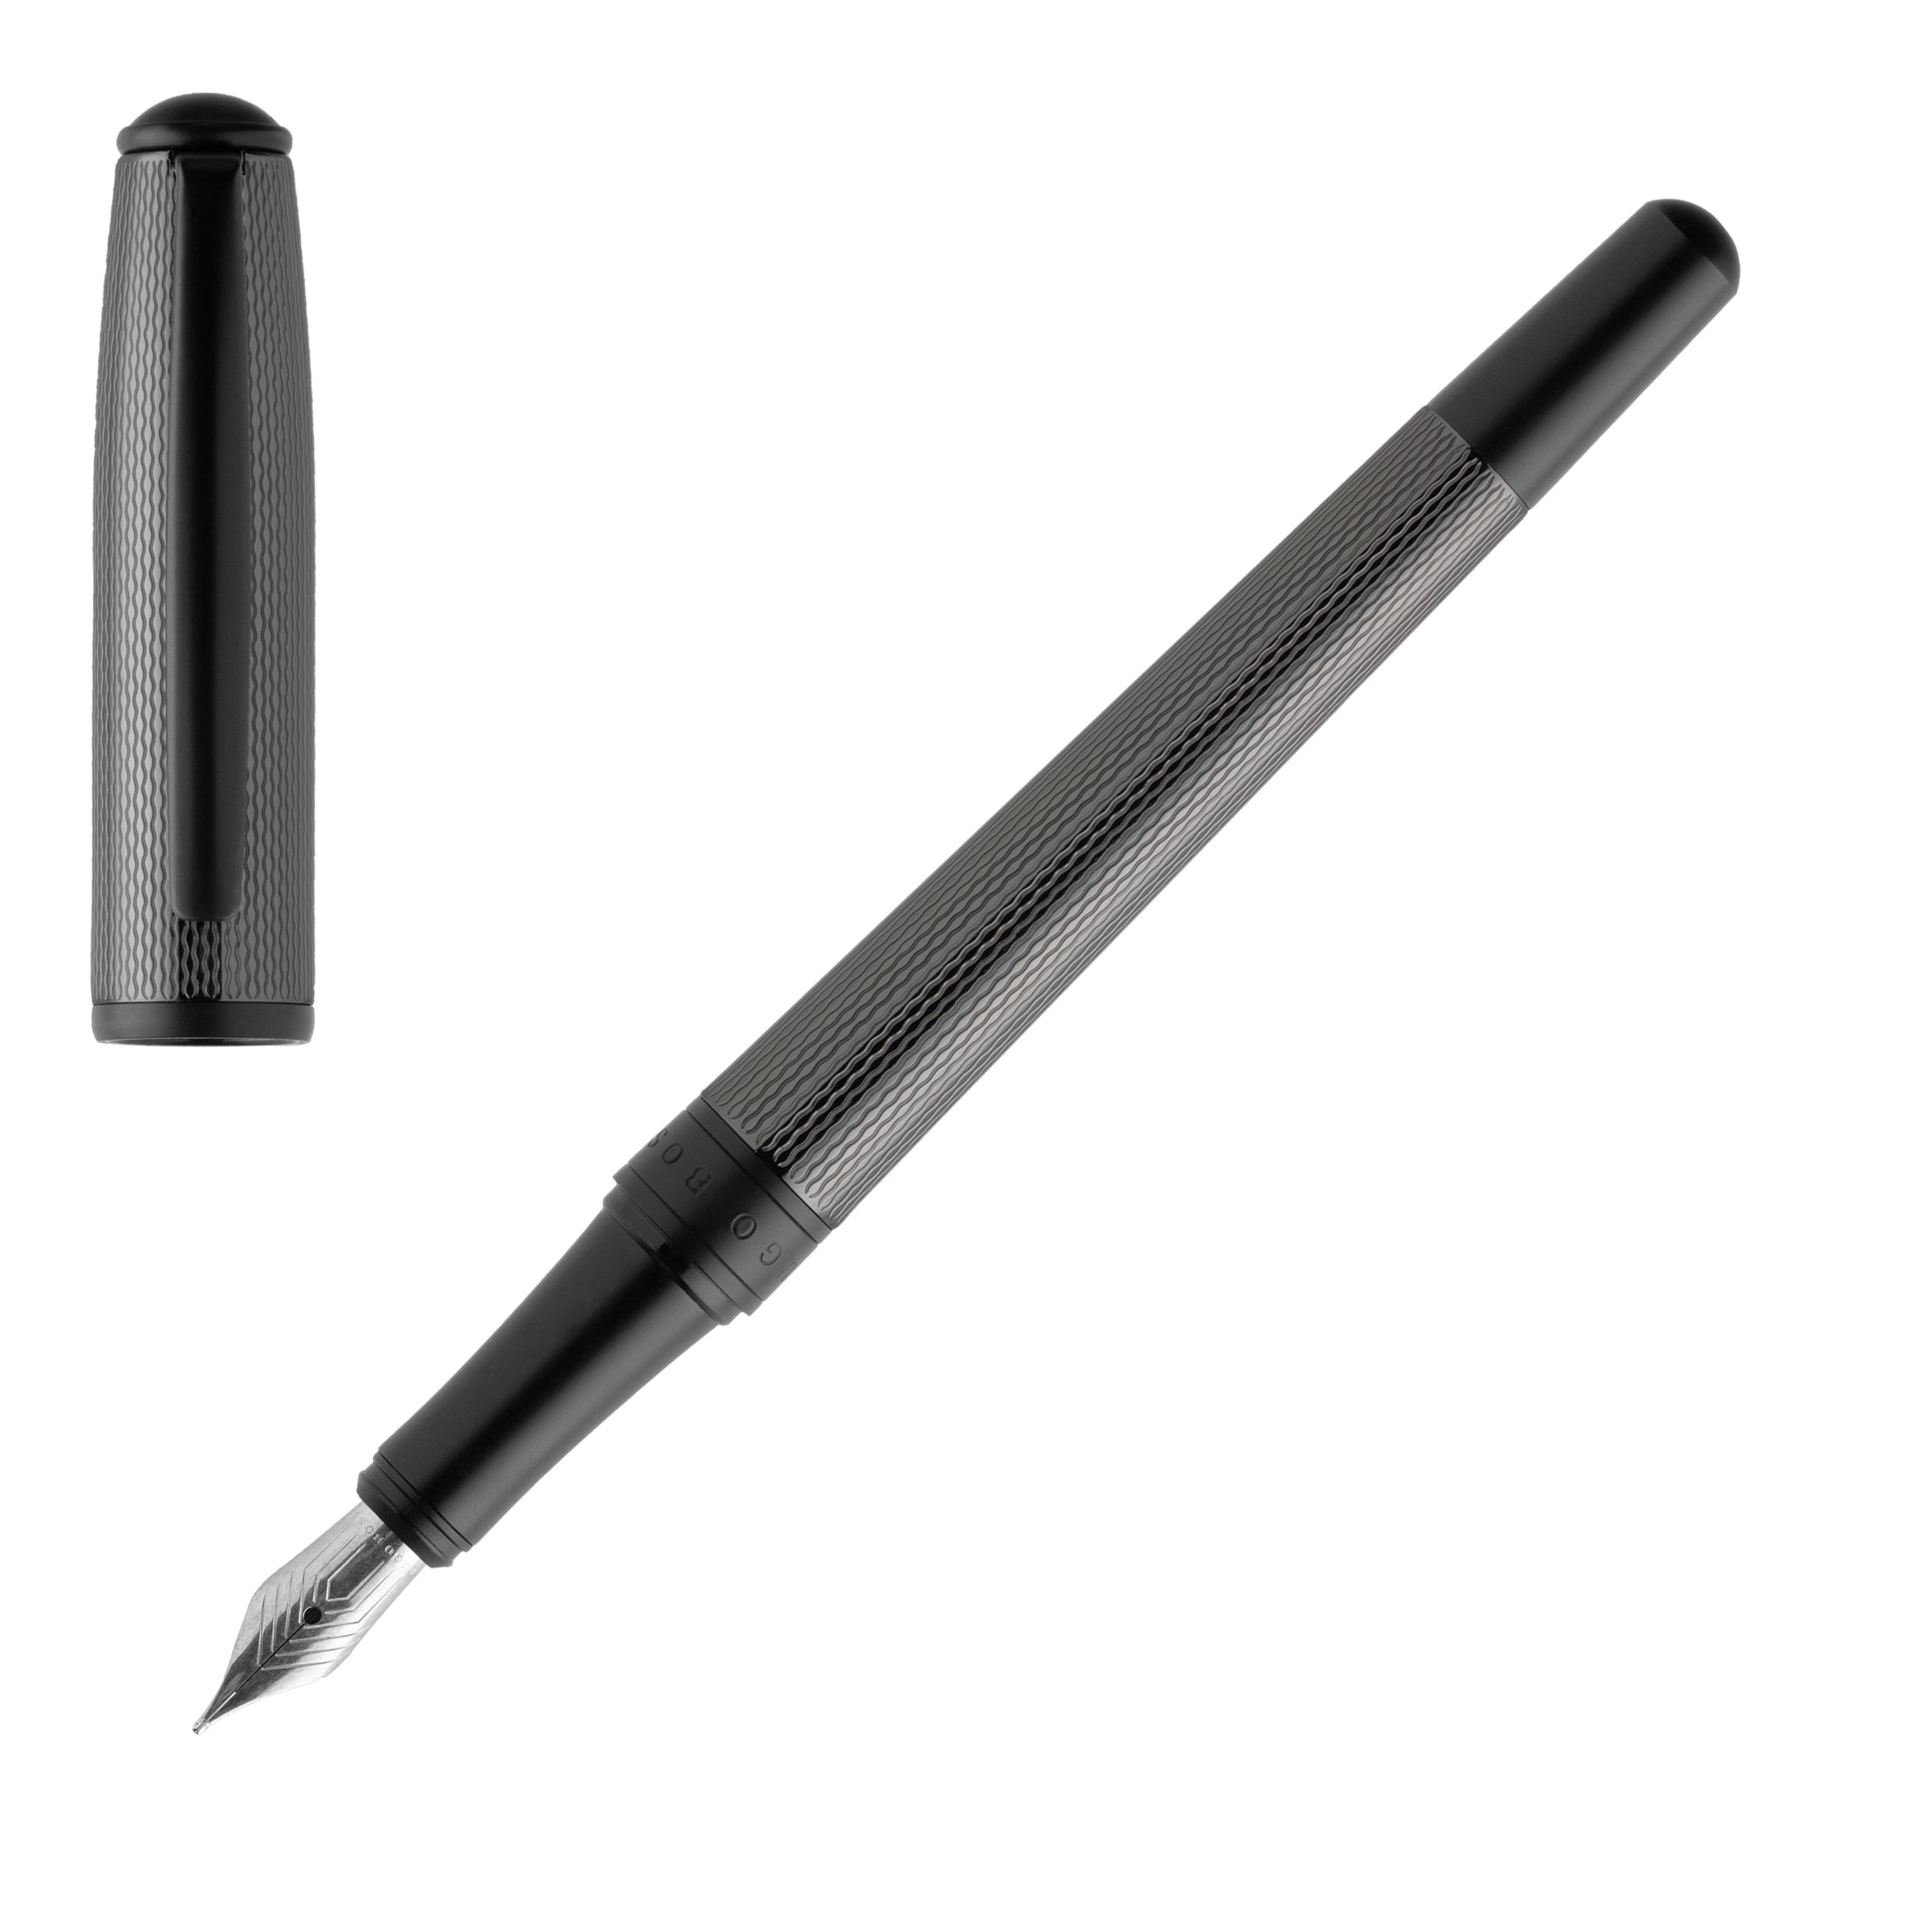 Hugo Boss fountain pen essential glare black